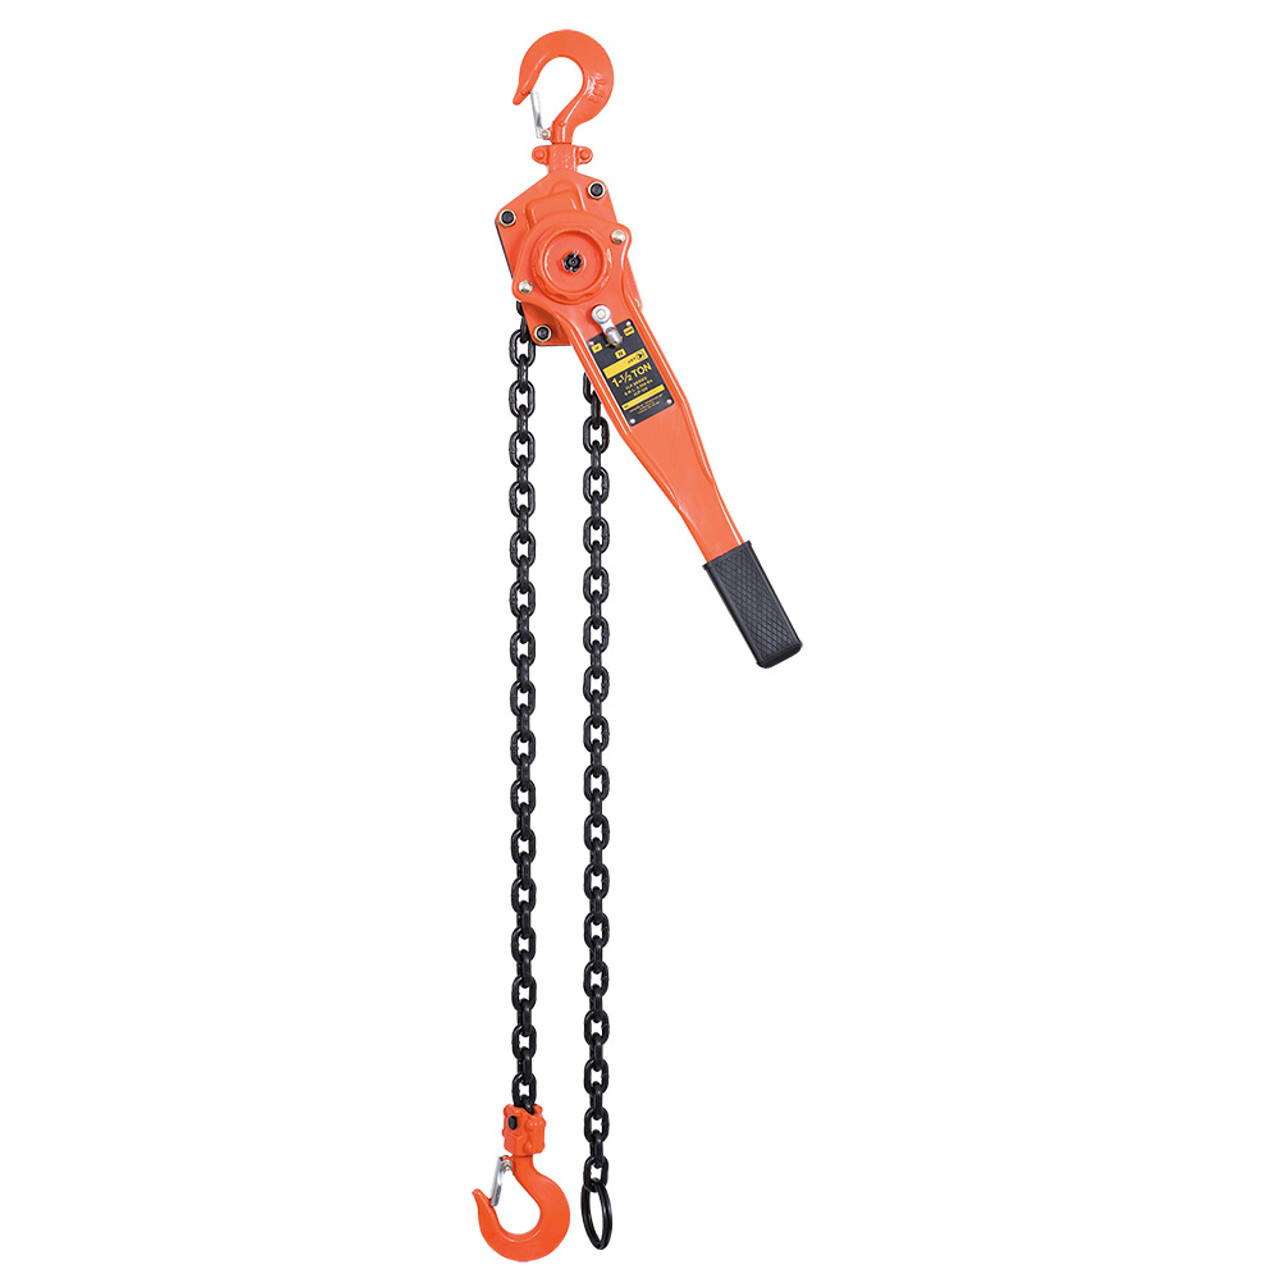 1-1/2T @ 10' Lift VLP Series Lever Chain Hoist 110307